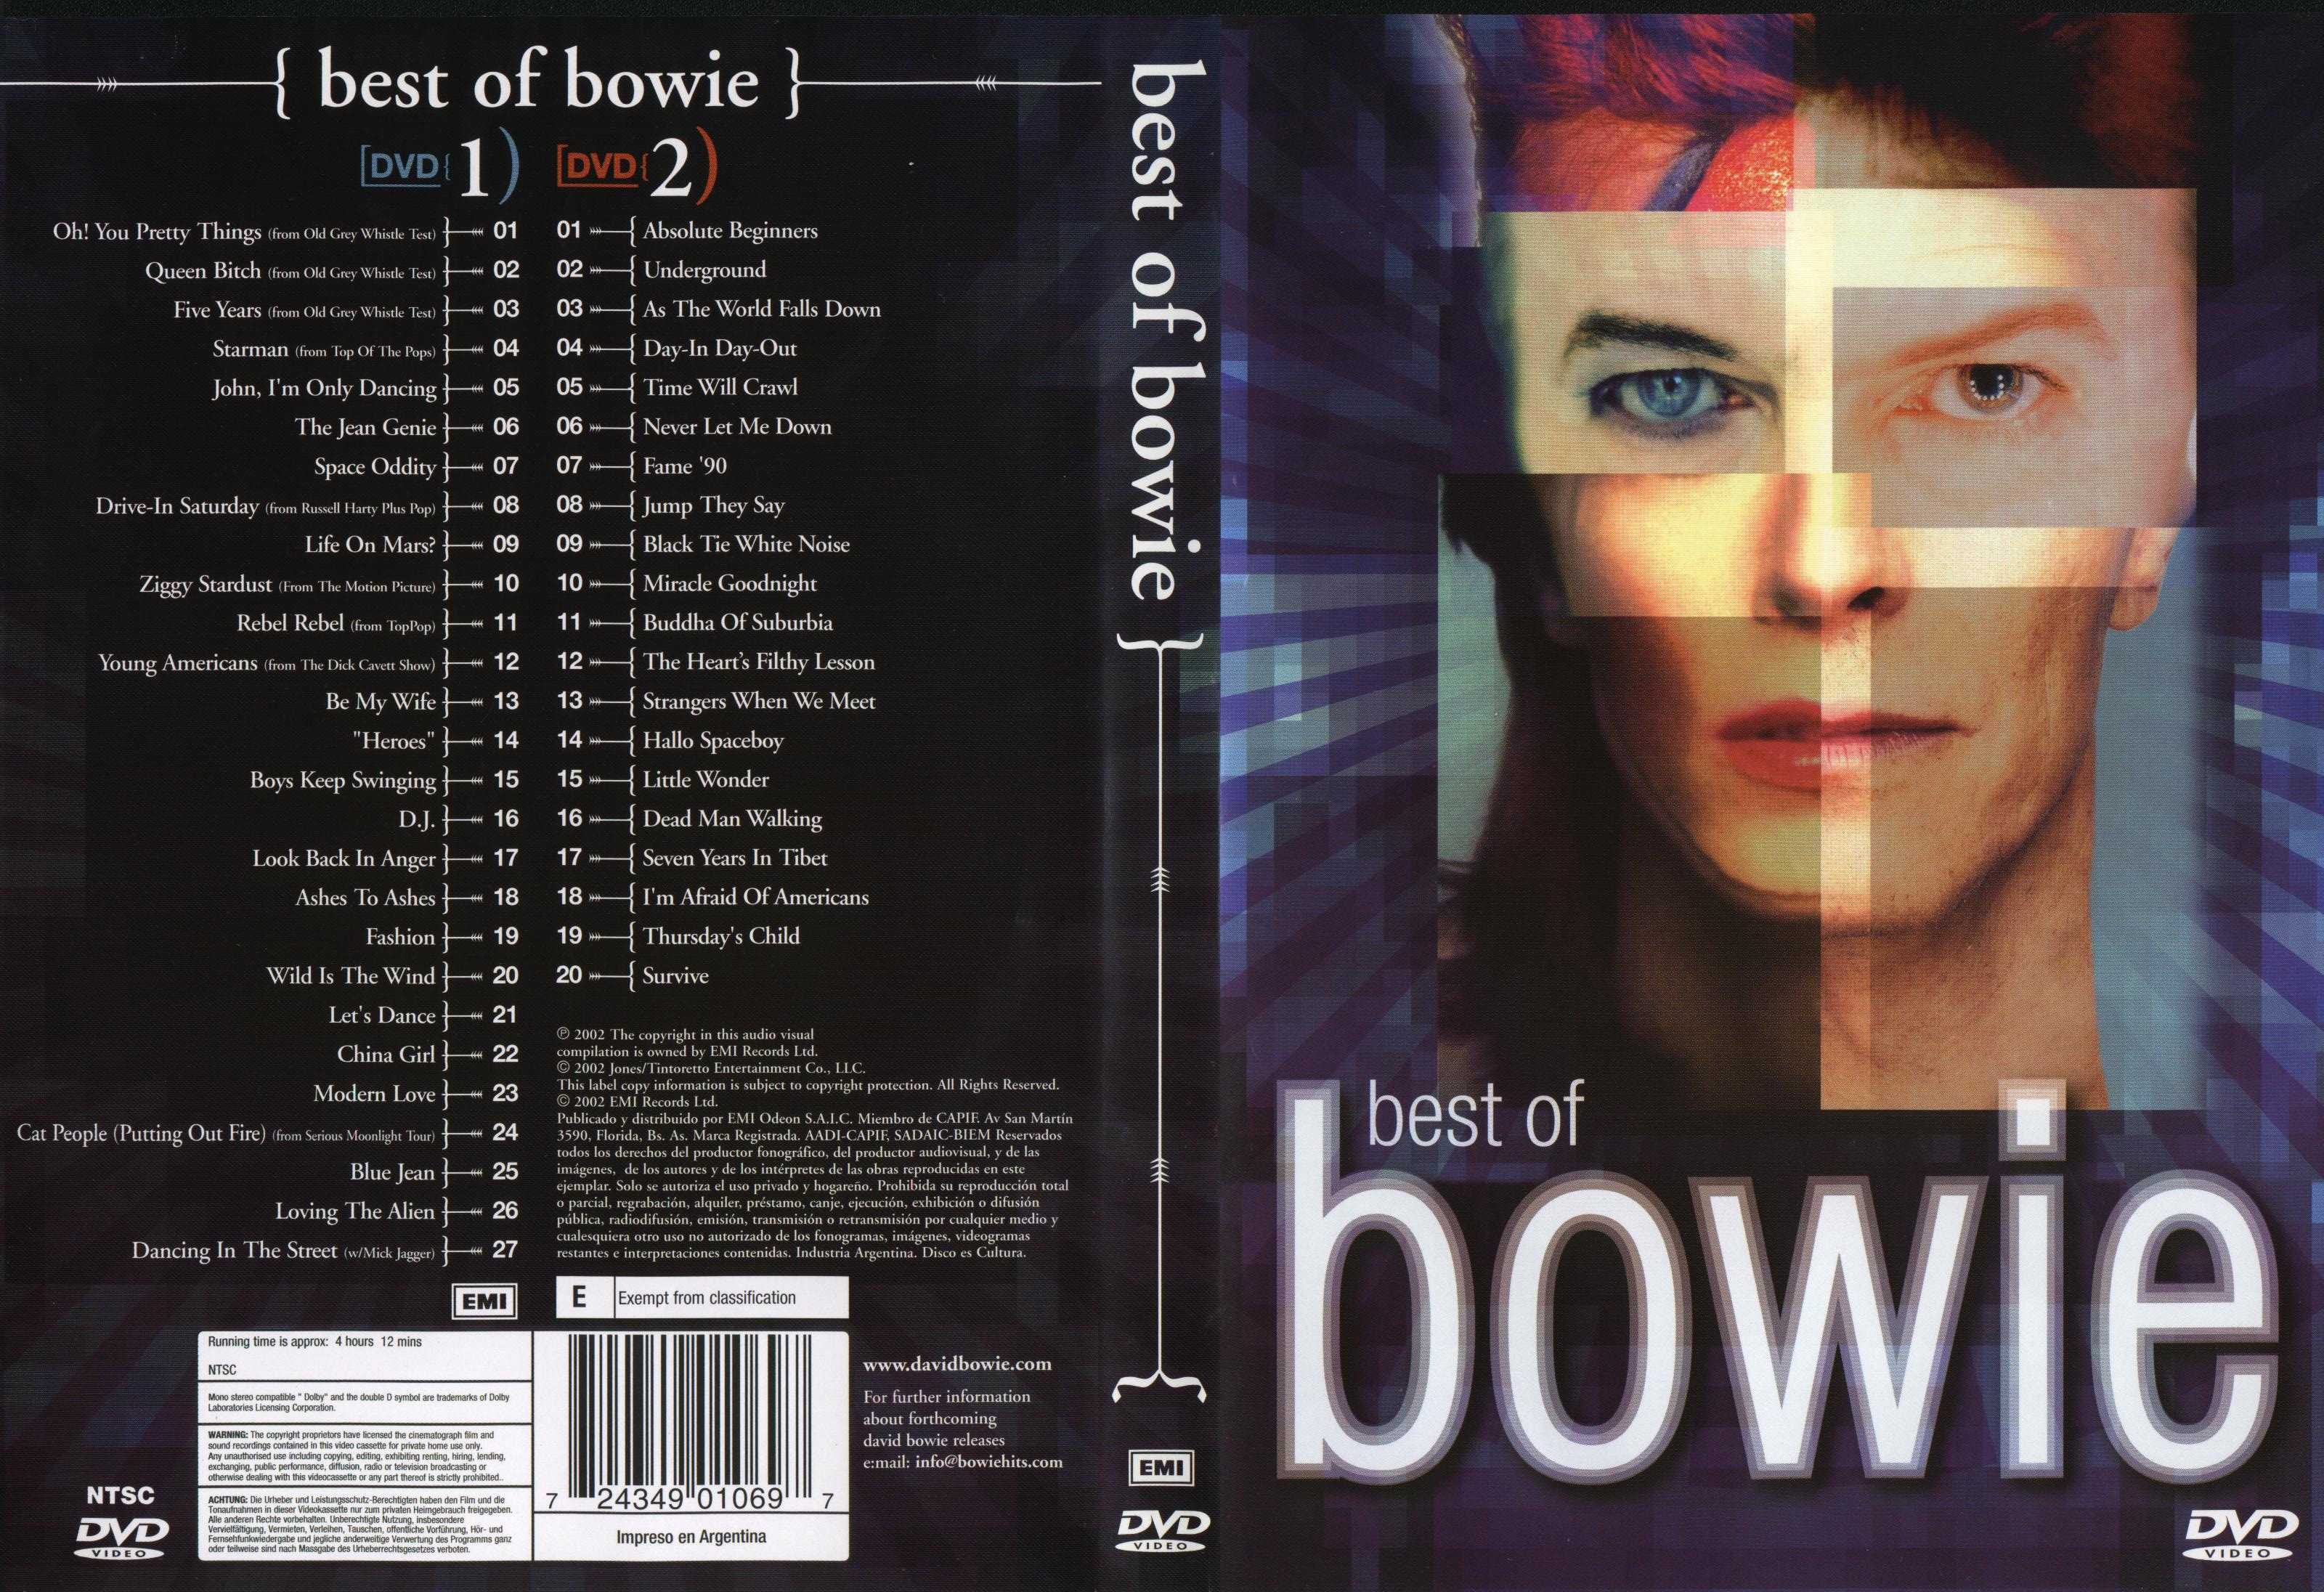 Jaquette DVD Bowie best of